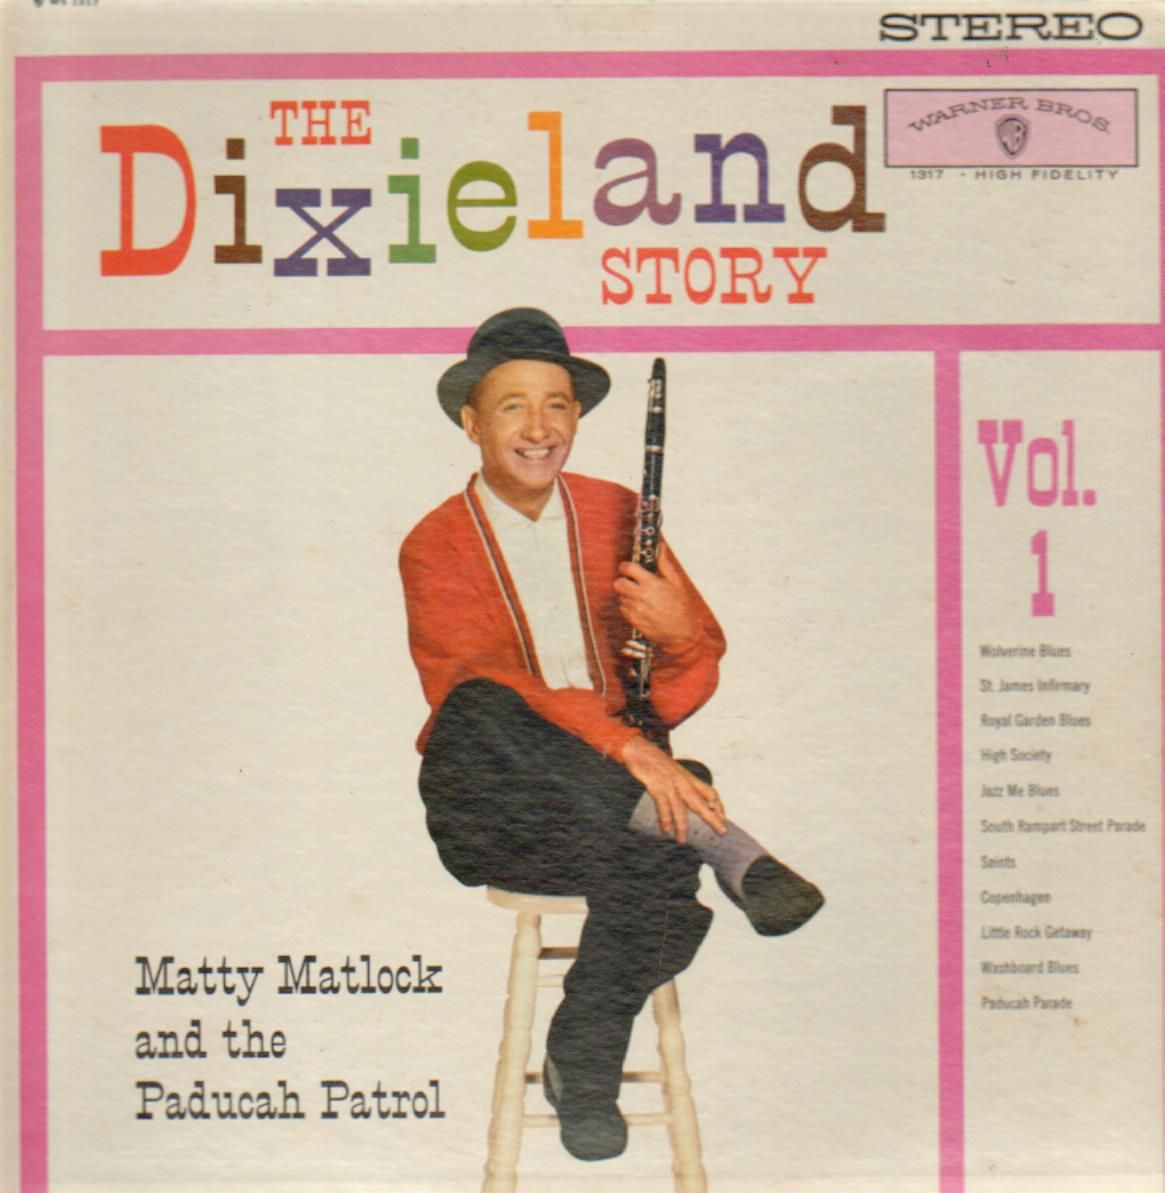 MATTY MATLOCK - The Dixieland Story Vol.1 cover 